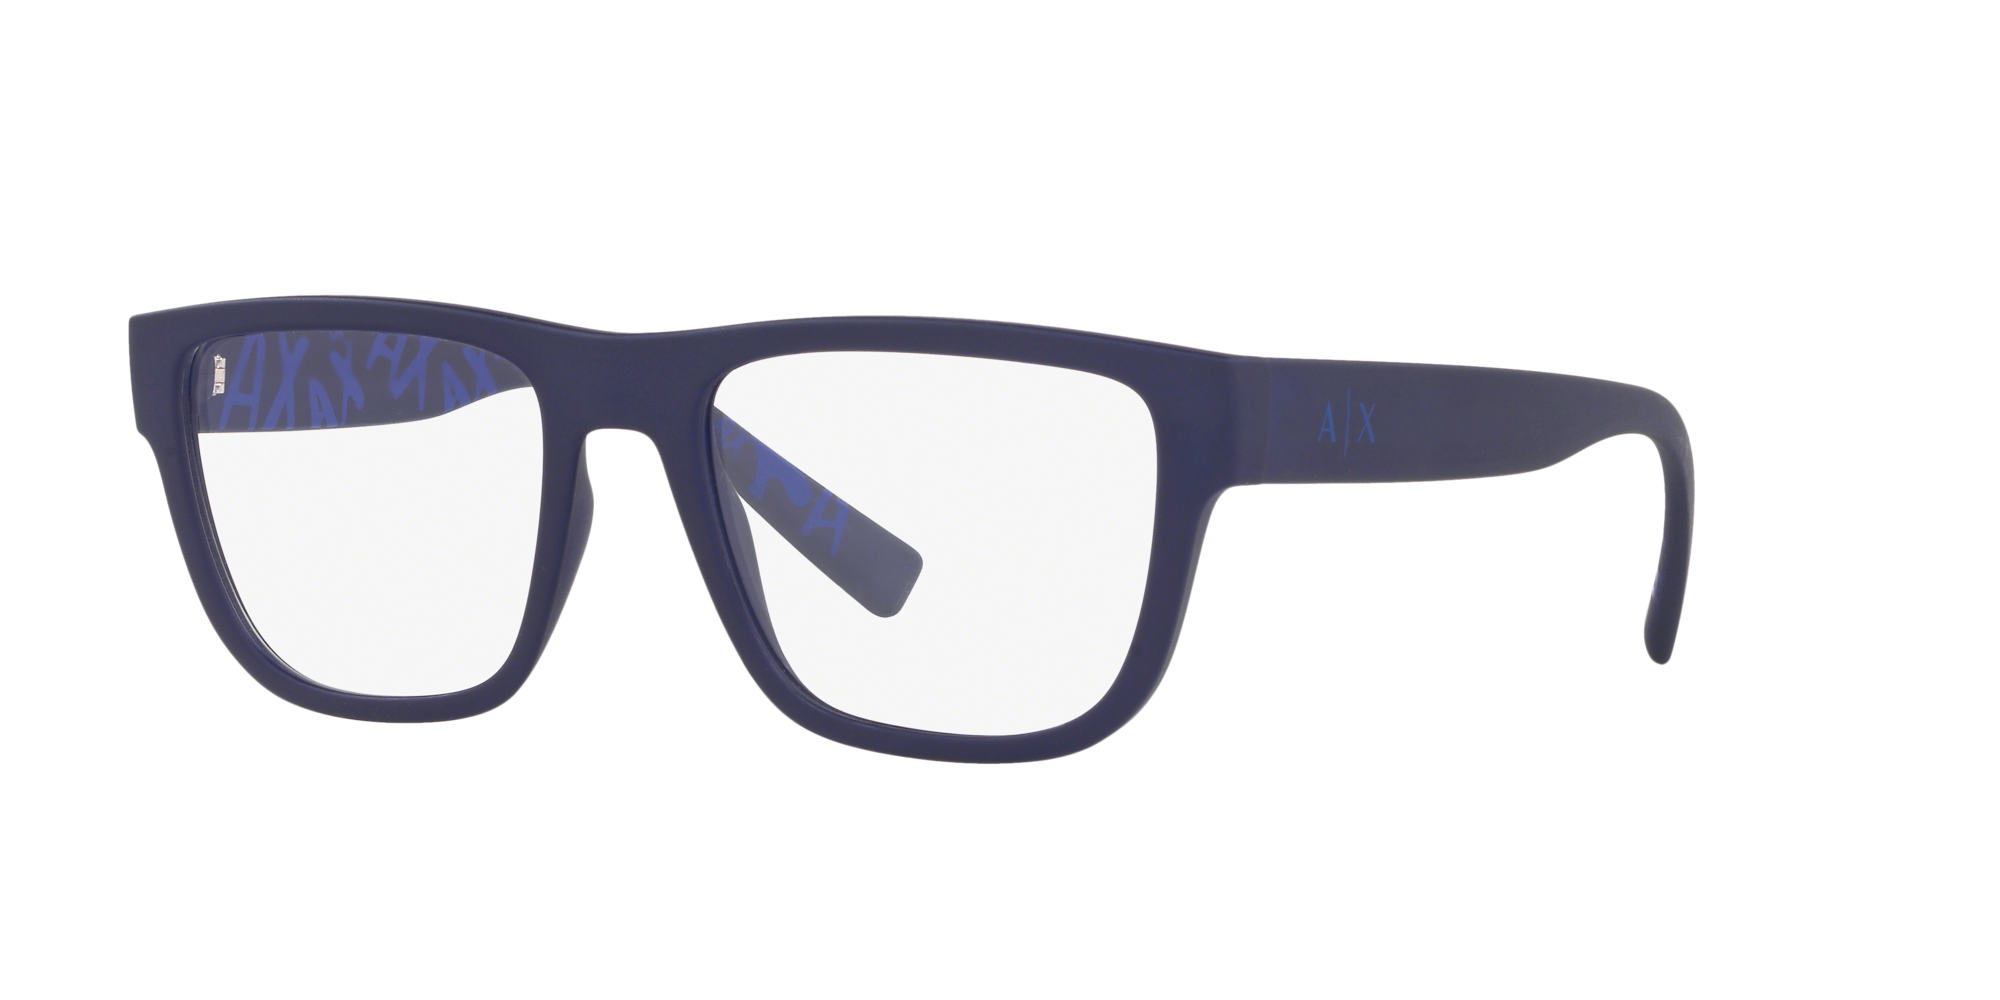 Armani Exchange Blue Glasses Factory Sale, SAVE 42% 